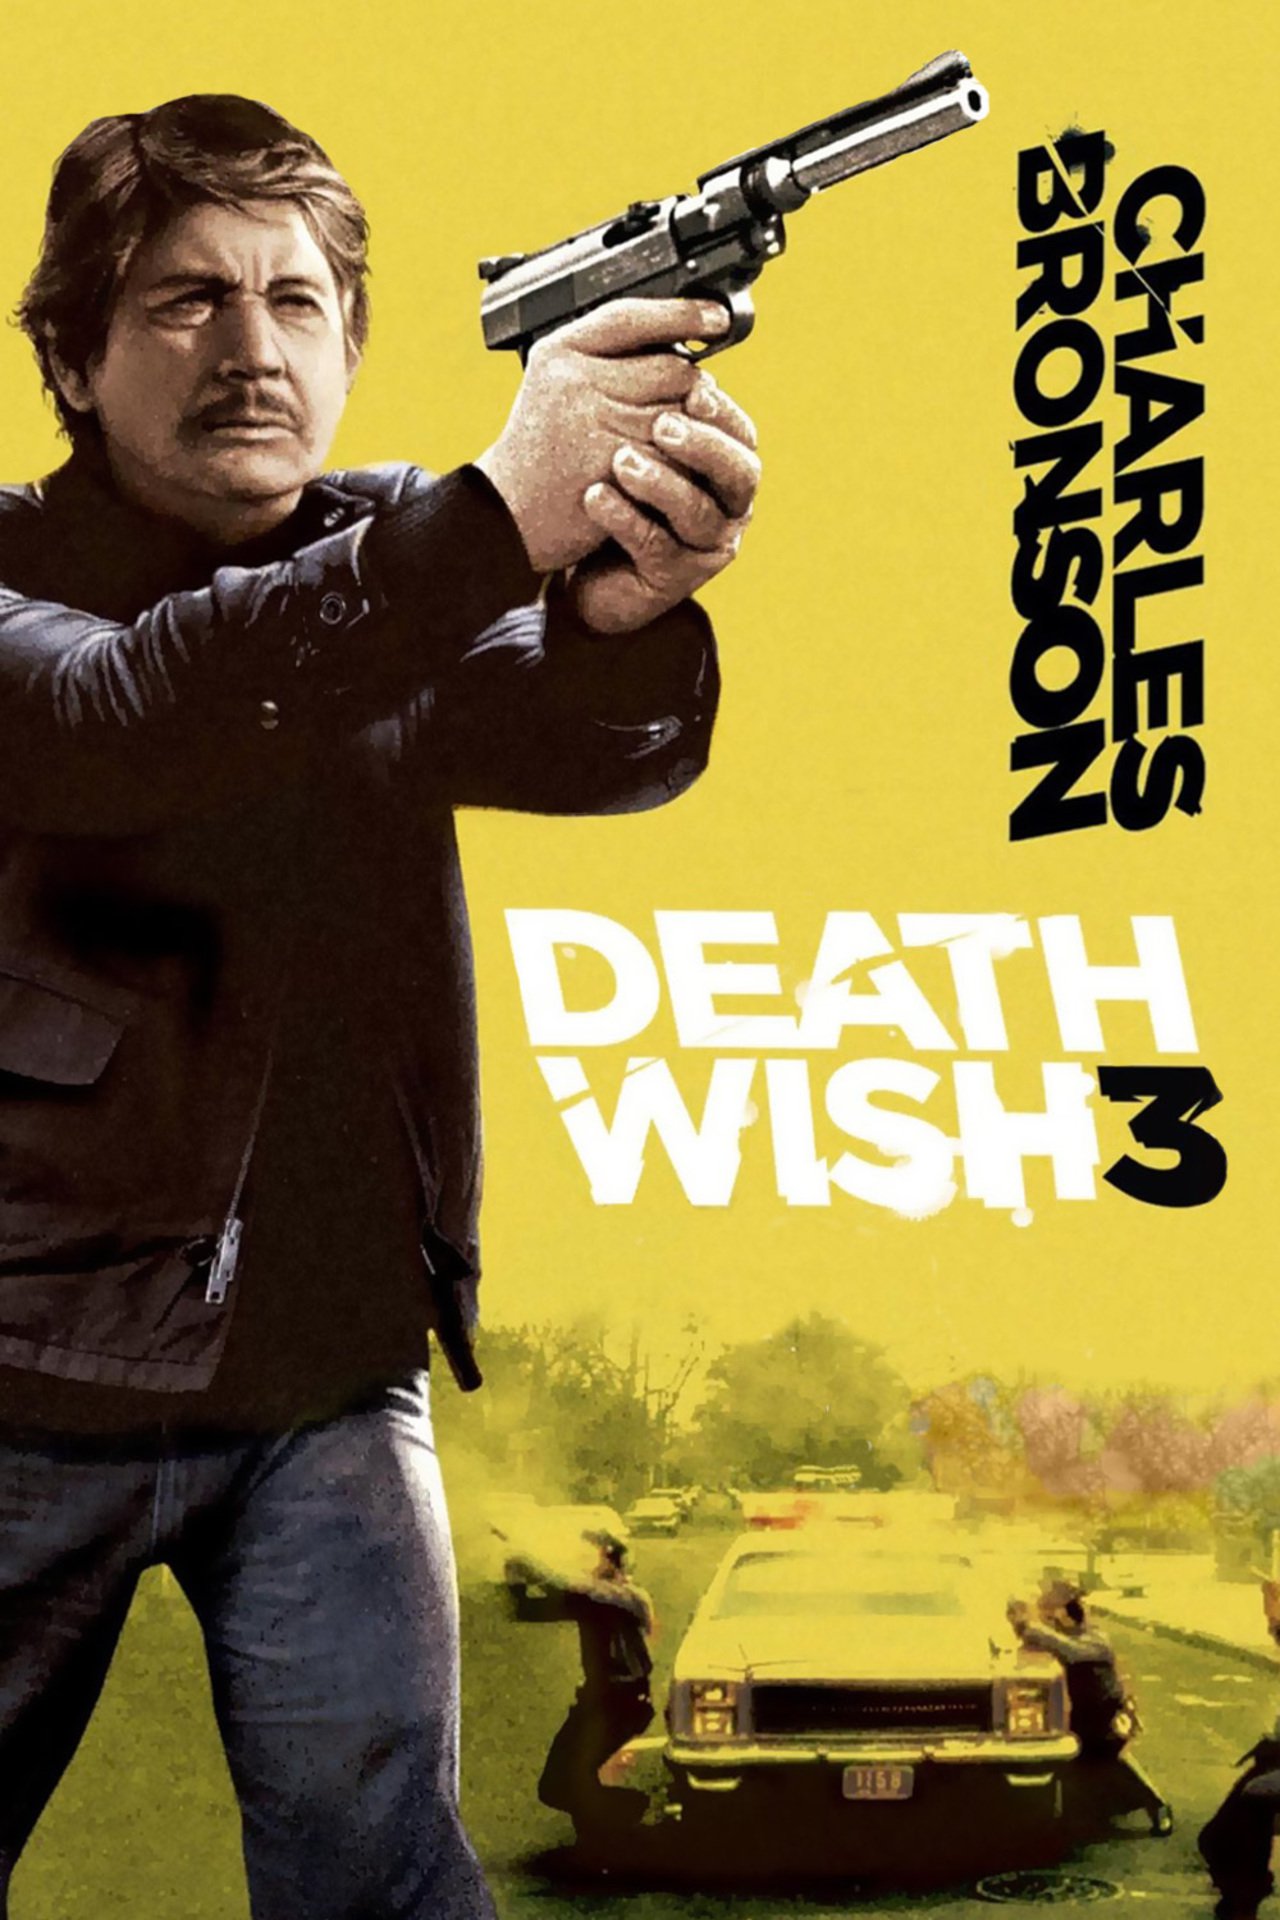 Death Wish 3 HD wallpapers, Desktop wallpaper - most viewed